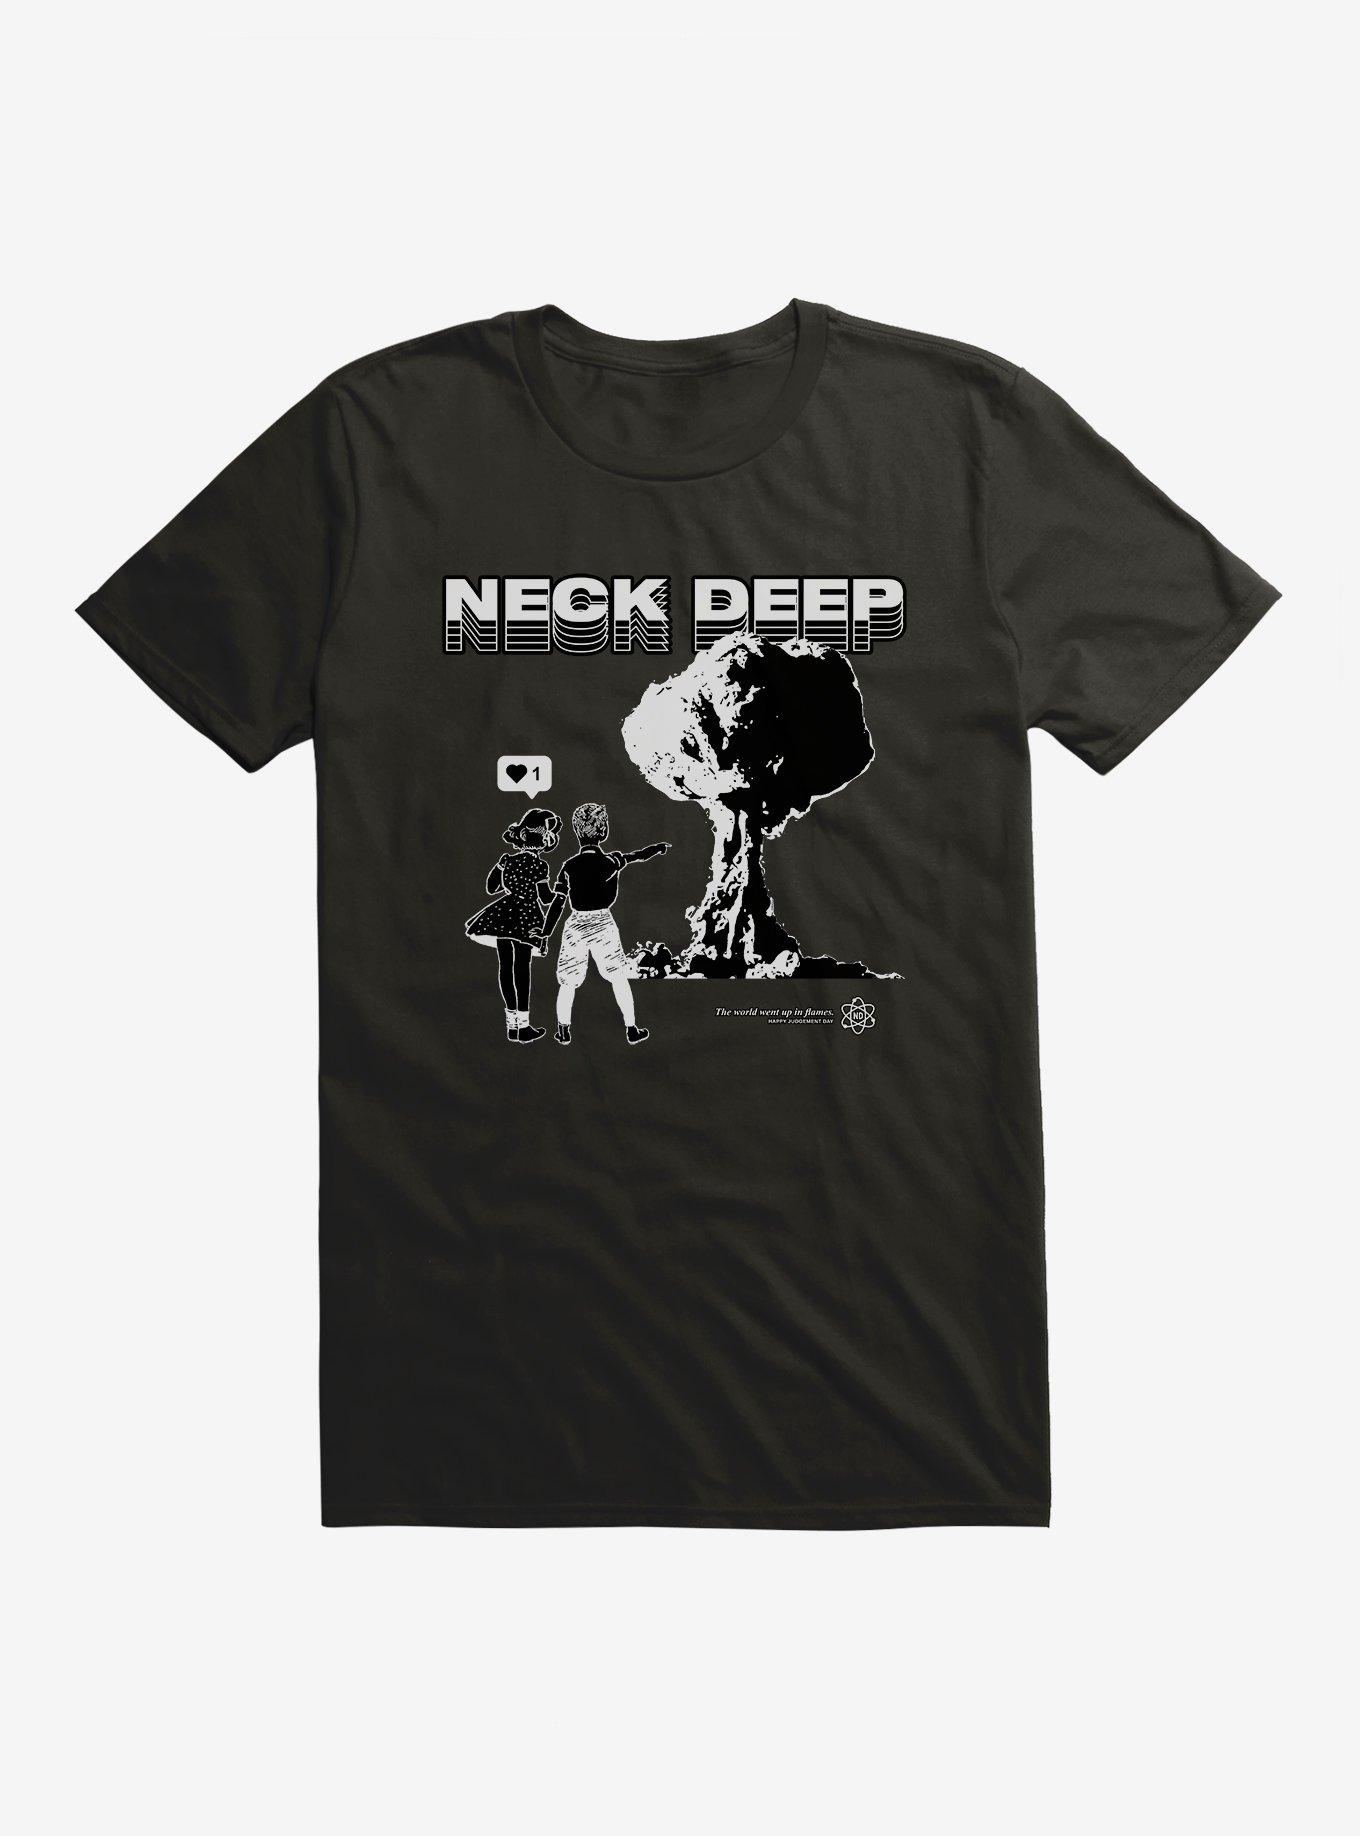 Neck Deep Nuclear Couple T-Shirt